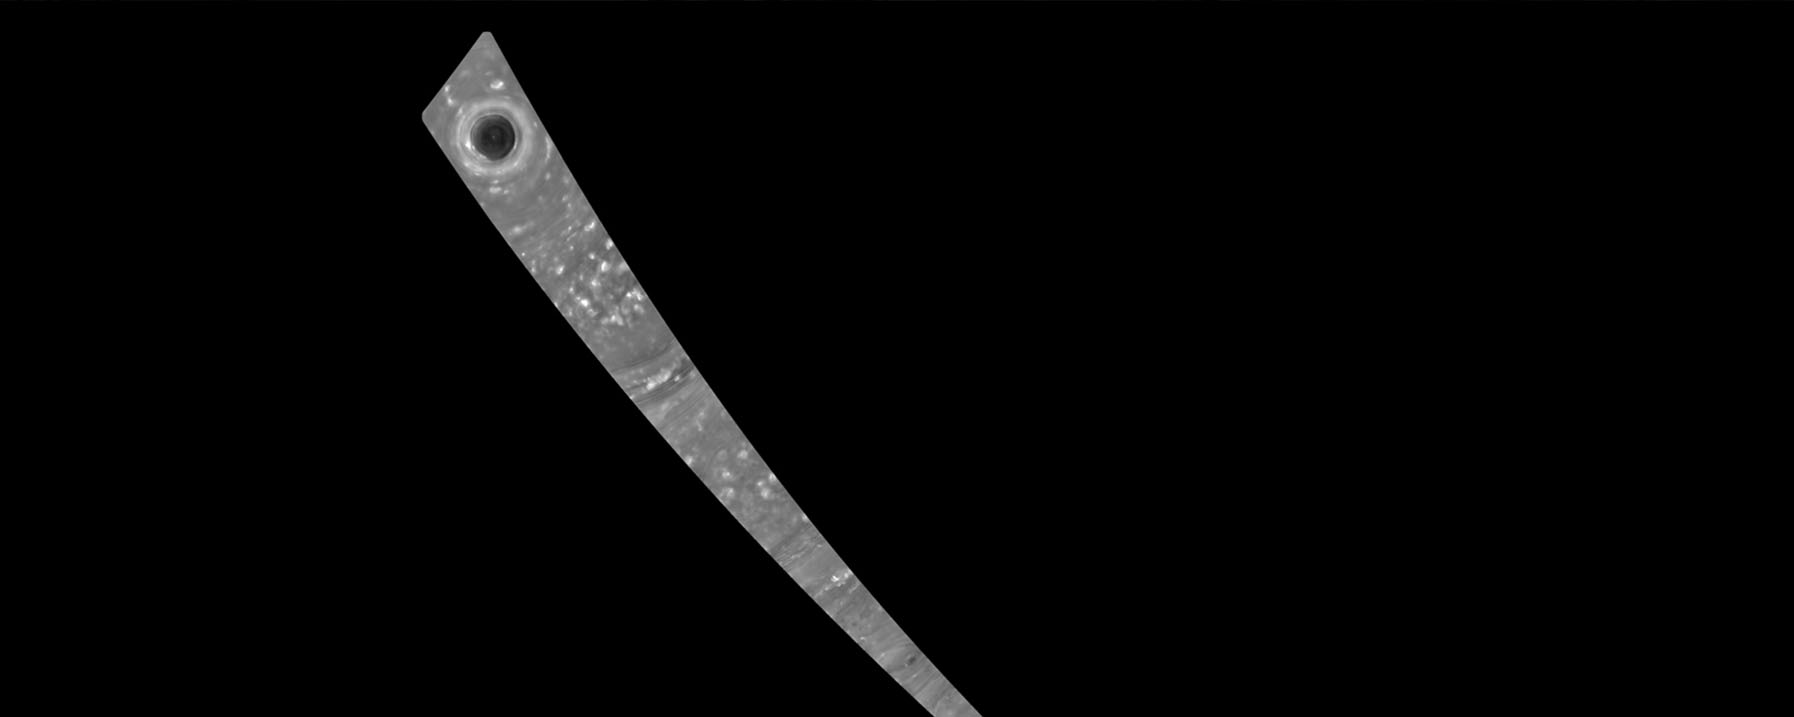 Saturn Image from Cassini